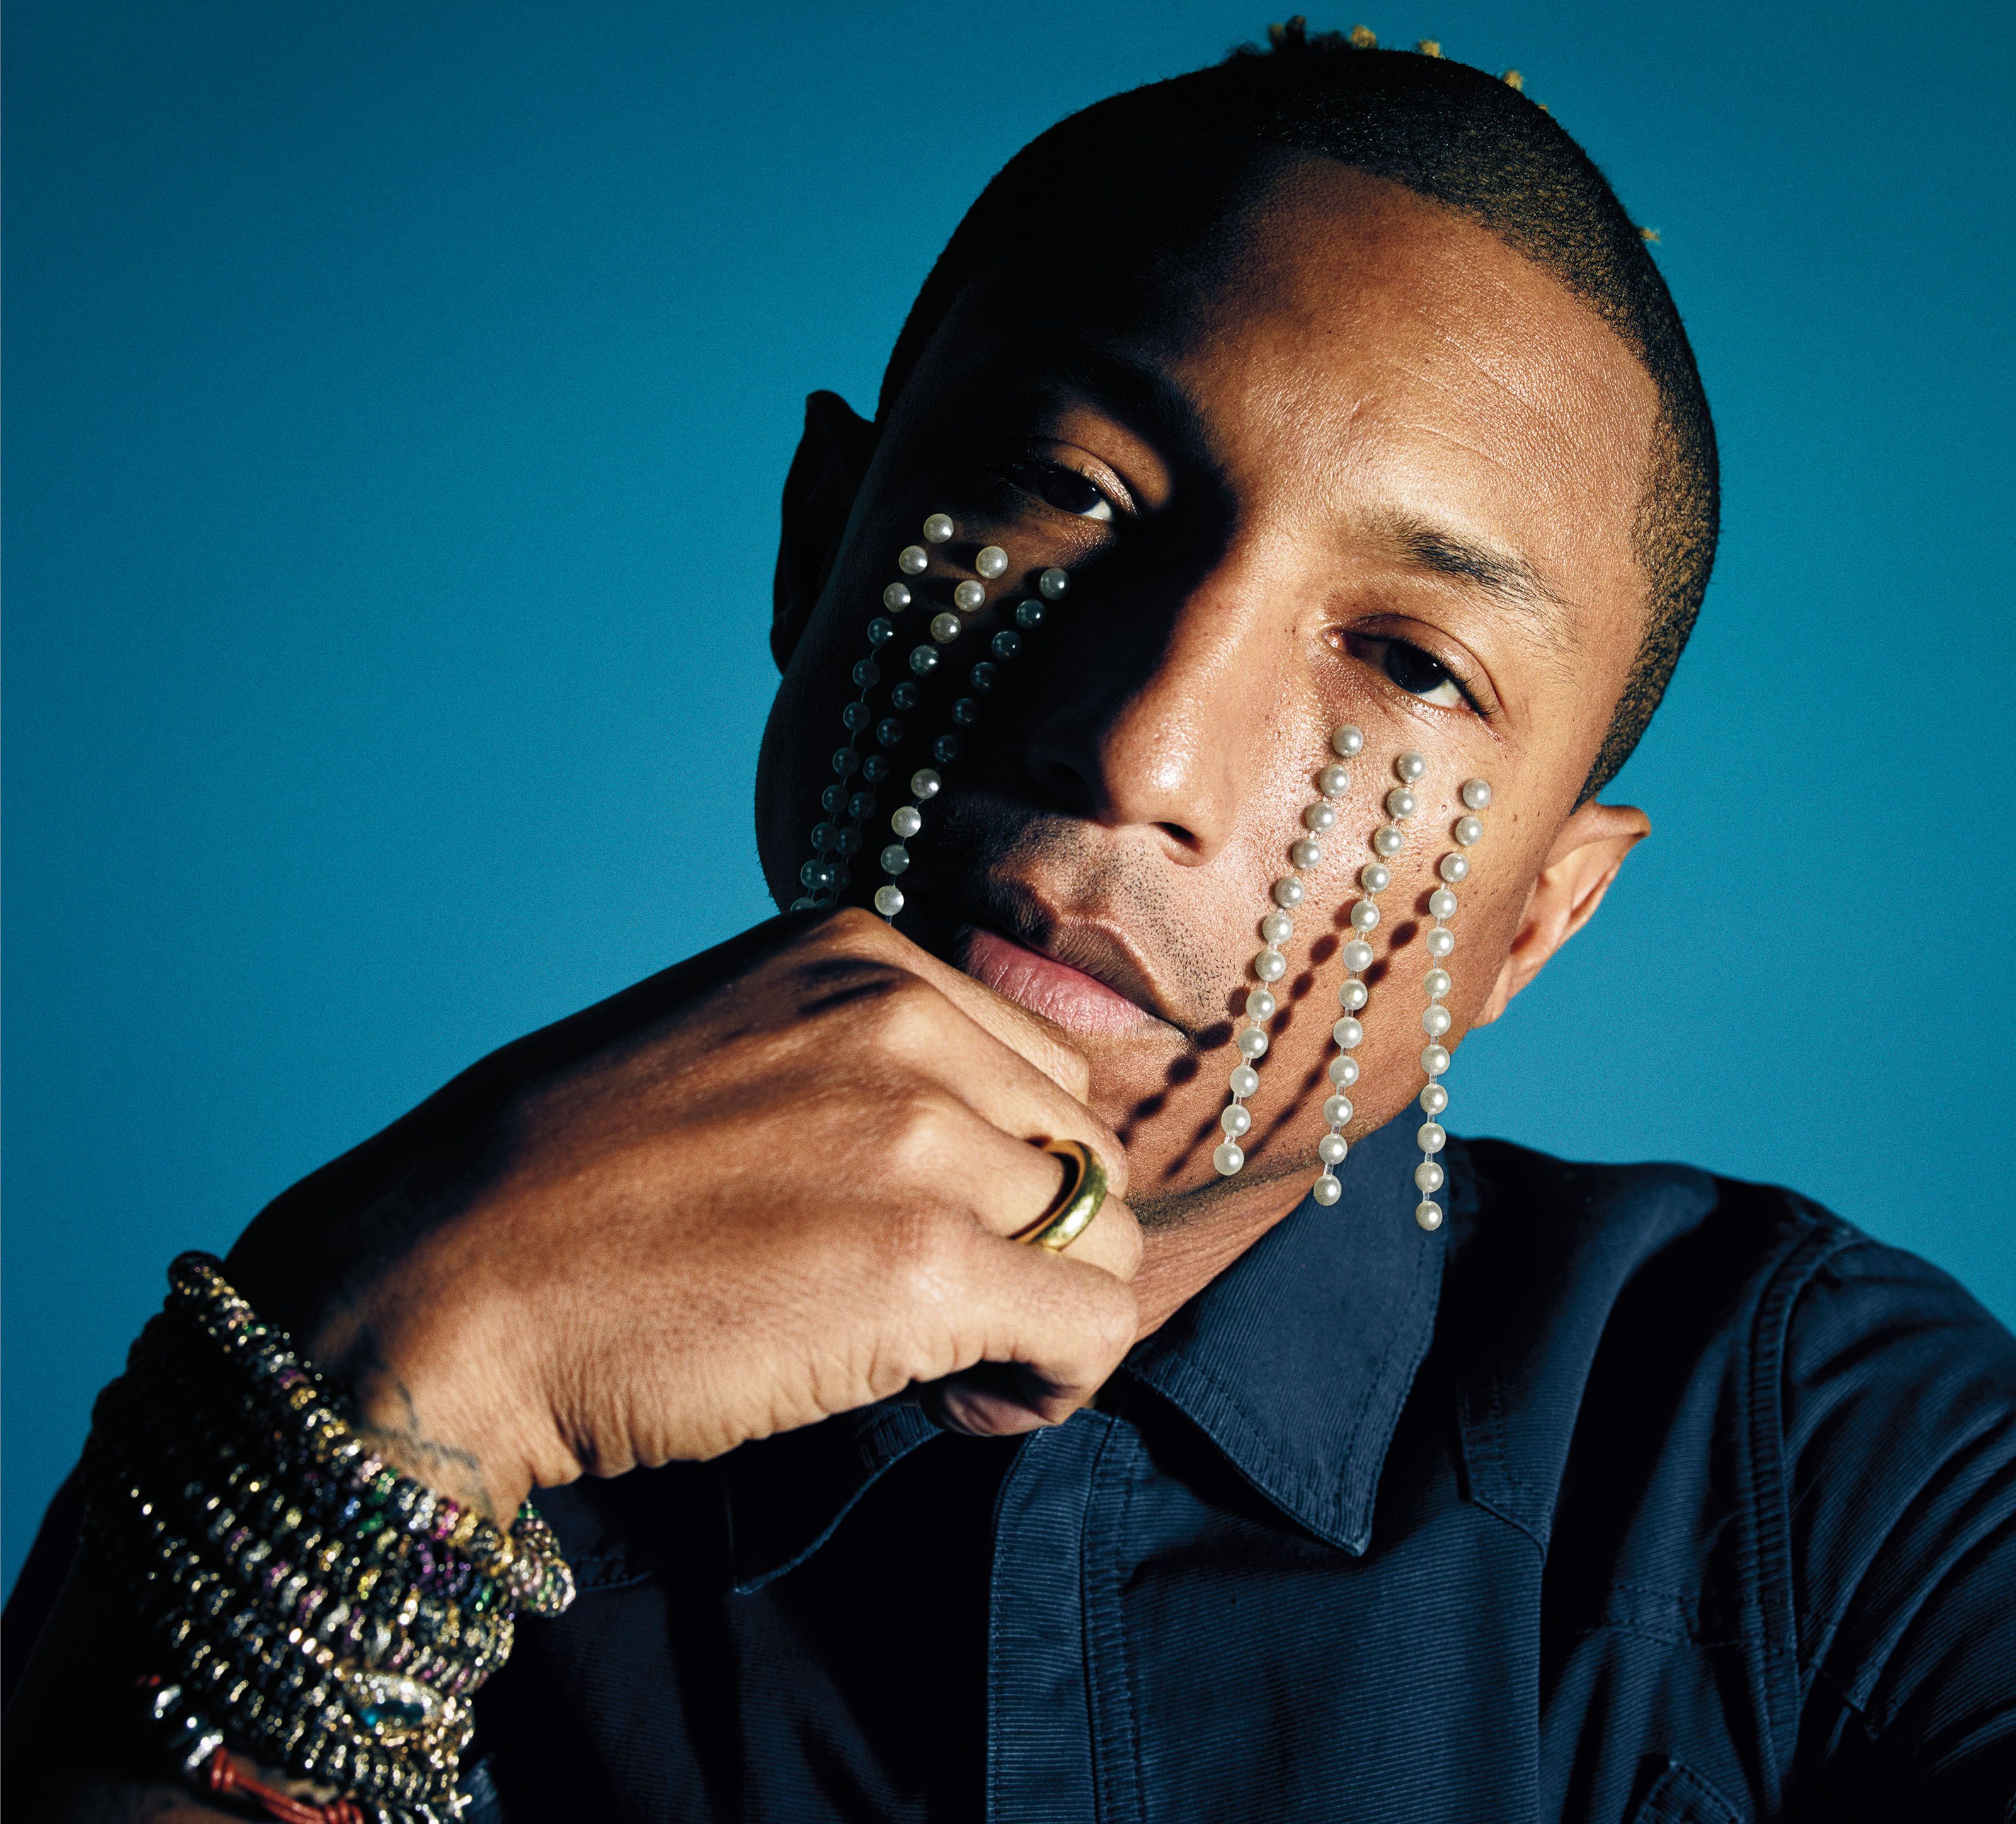 Chinese netizens react to Pharrell Williams' first Louis Vuitton show